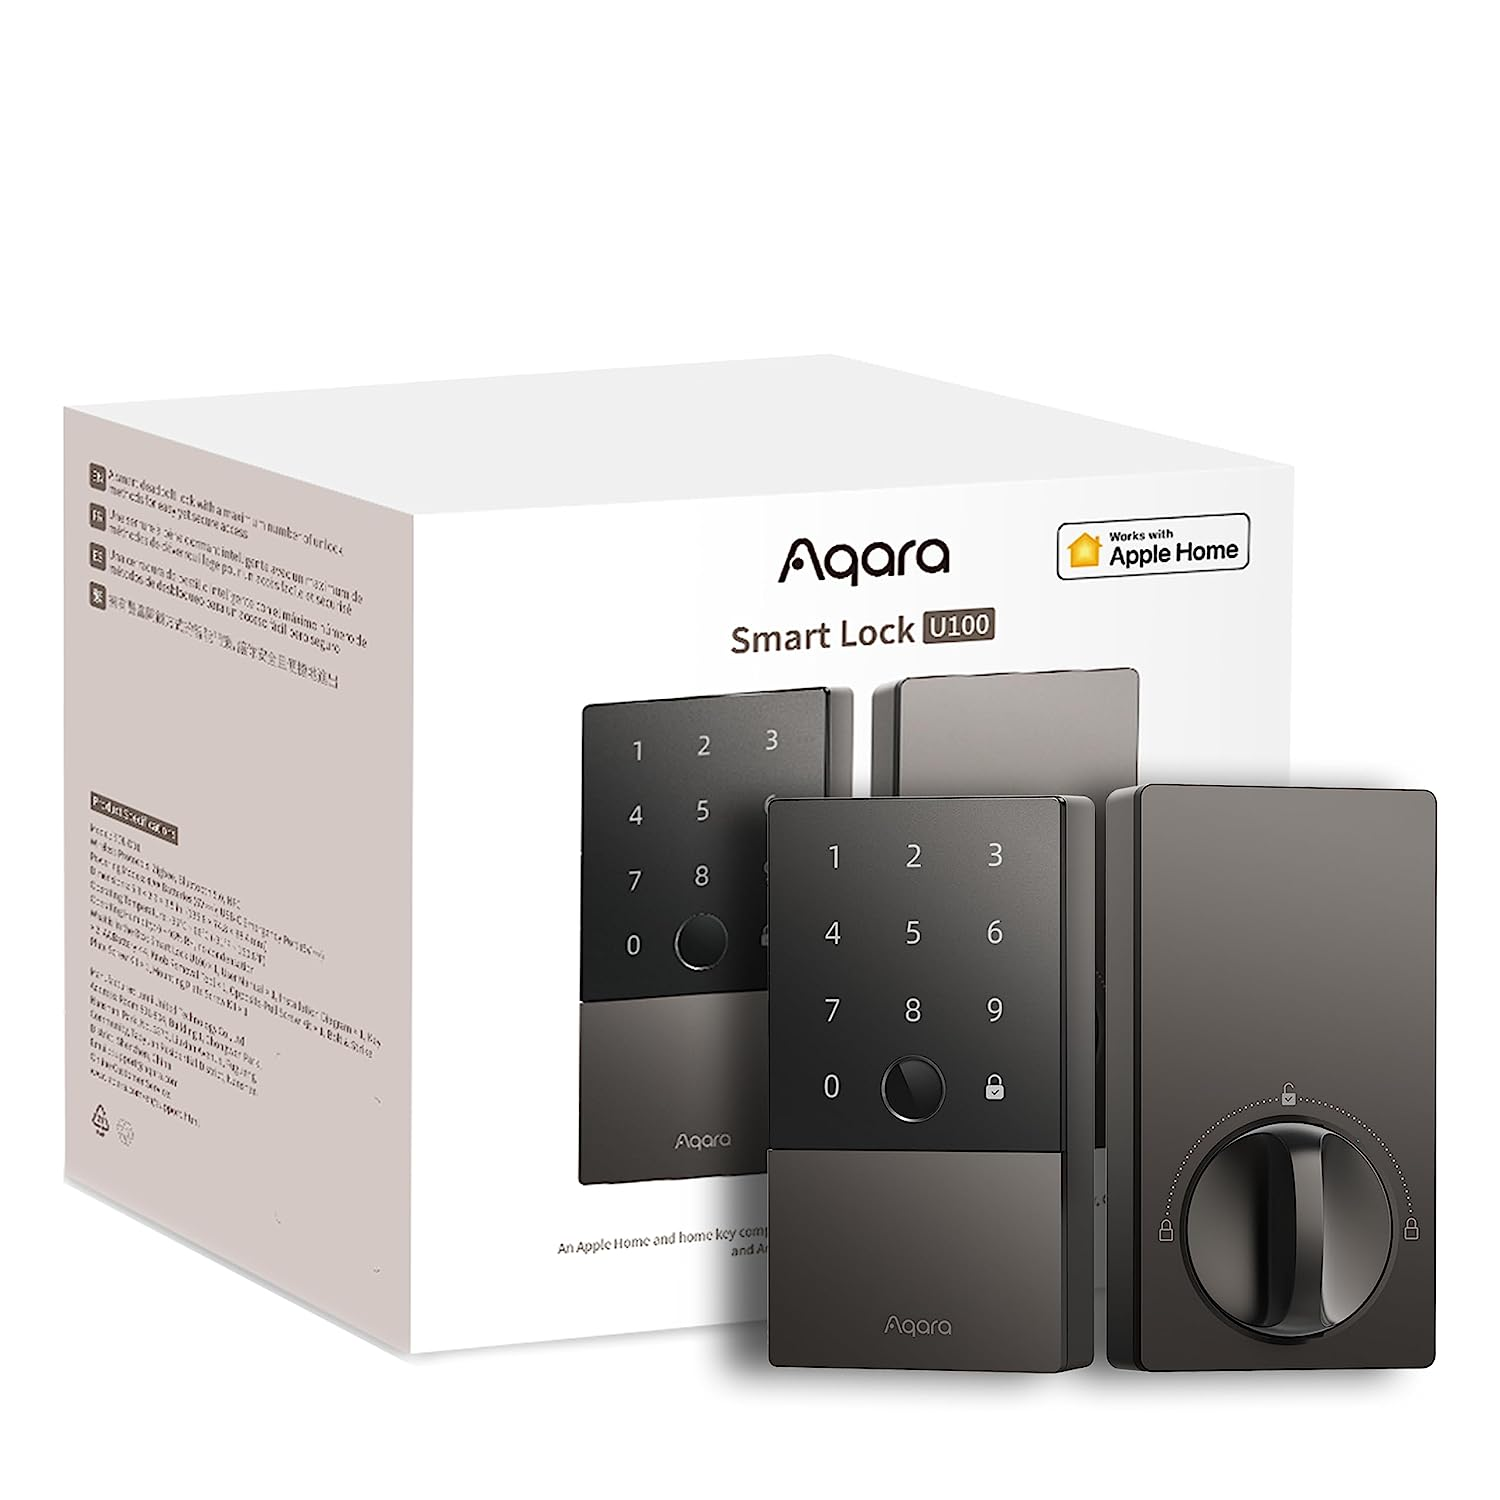 Consomac : Des produits HomeKit d'Aqara vendus sur l'Apple Store